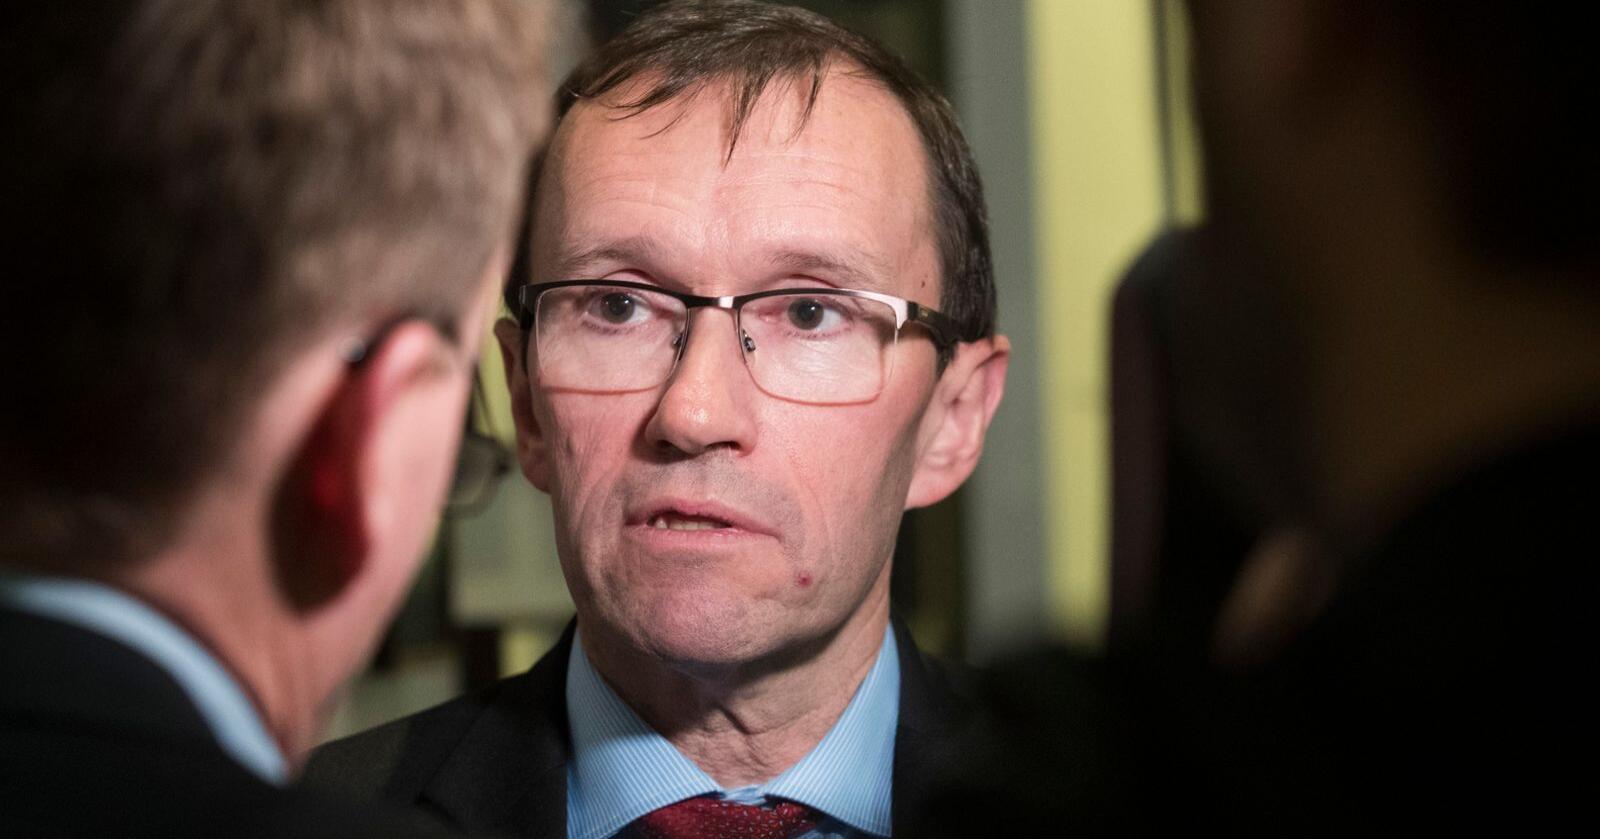 Ap-politiker Espen Barth Eide håper Sp snur i klimapolitikken. Foto: Terje Bendiksby / NTB